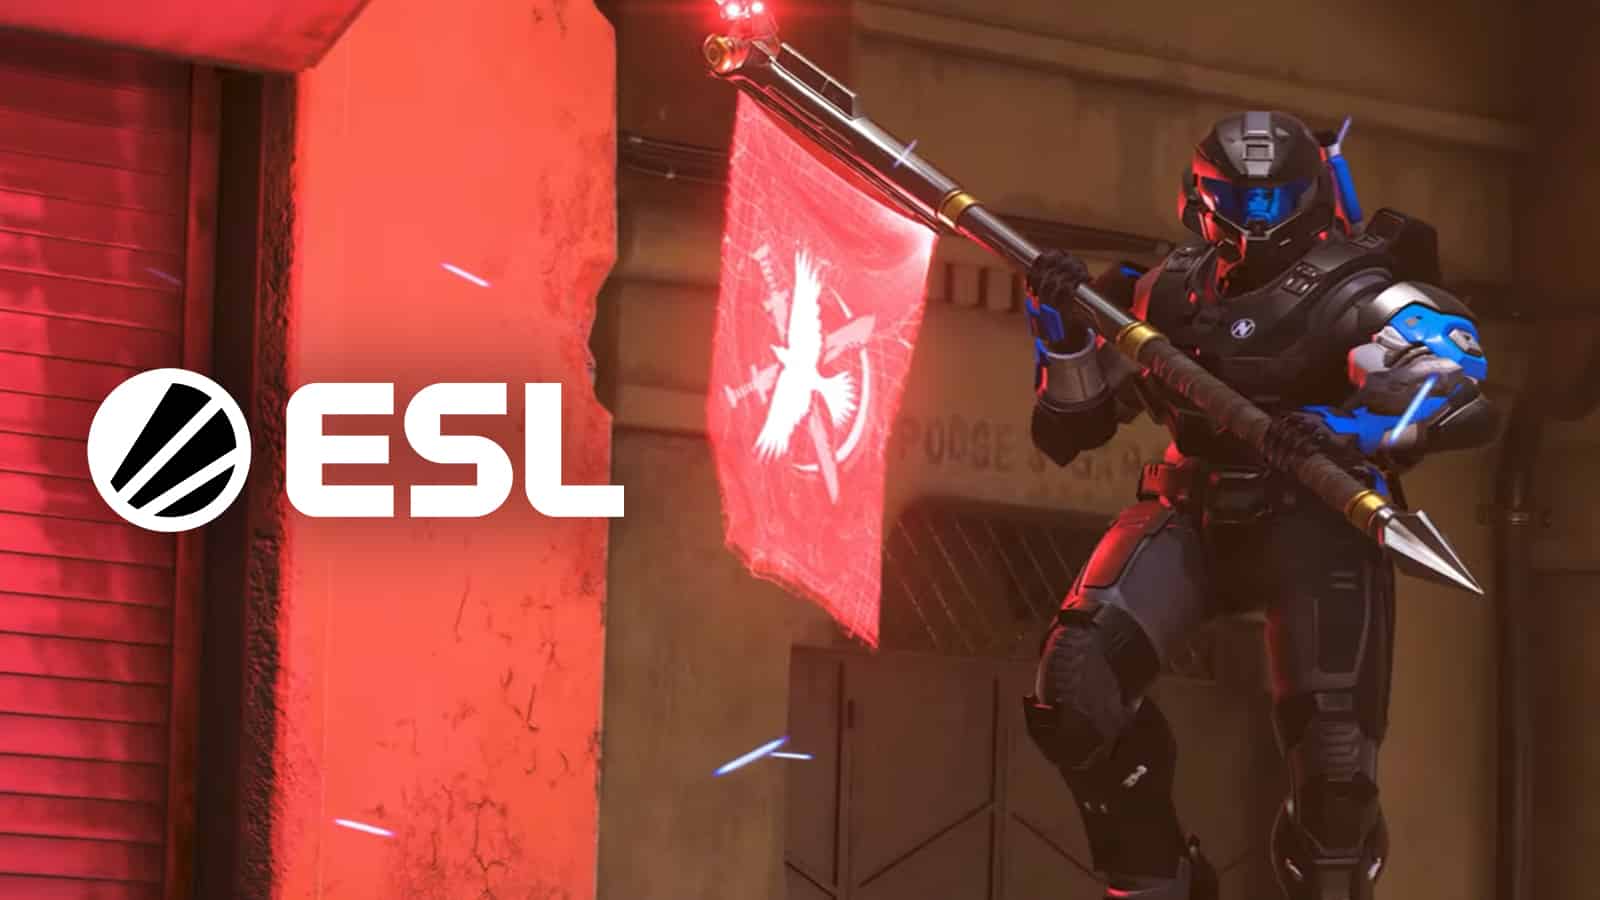 Envy skin in Halo with ESL logo